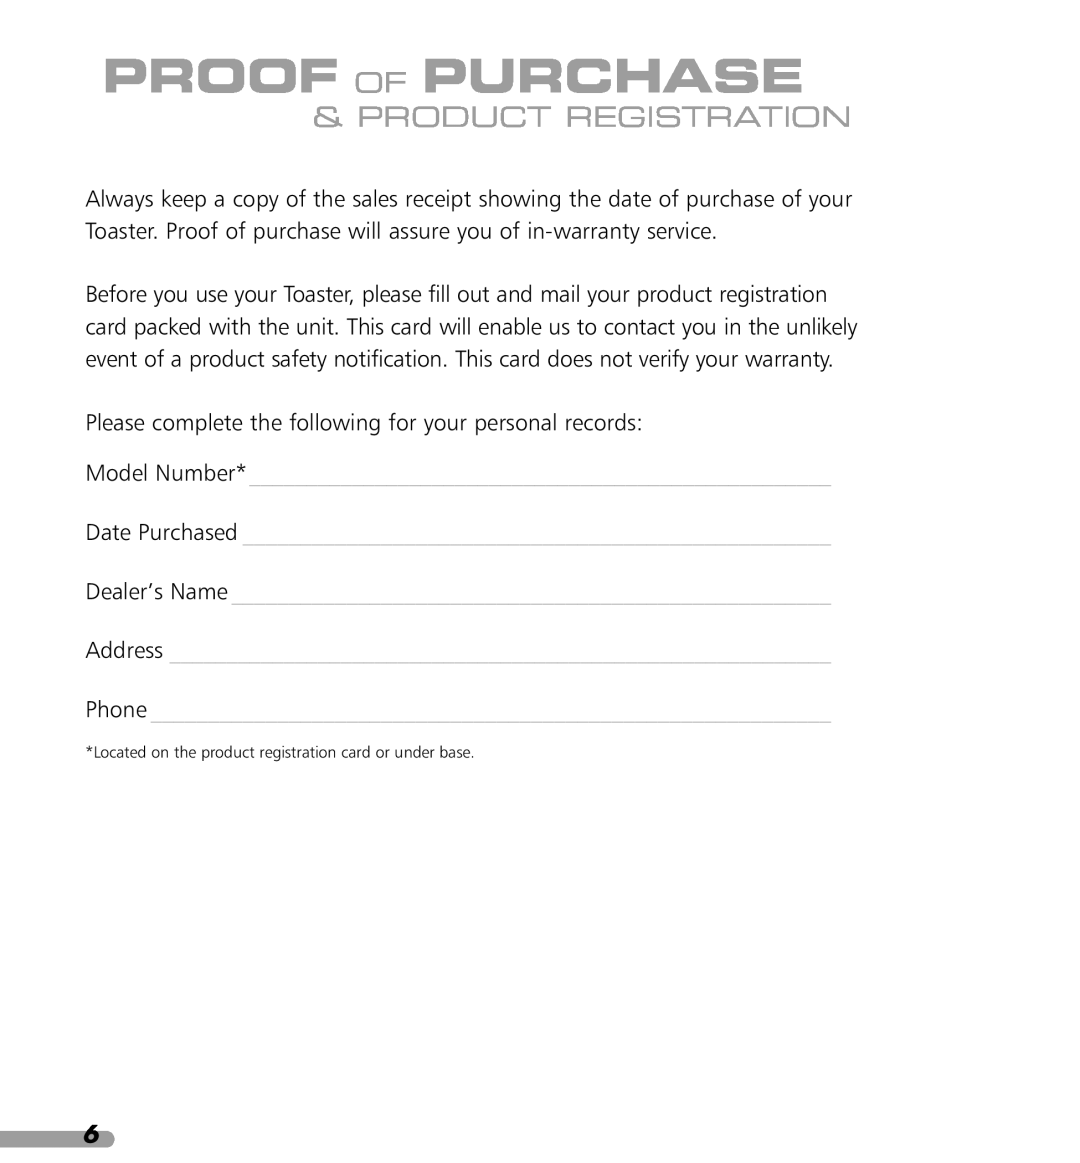 KitchenAid 4KPTT780, 4KPTT890 manual Proof Of Purchase, Product Registration 